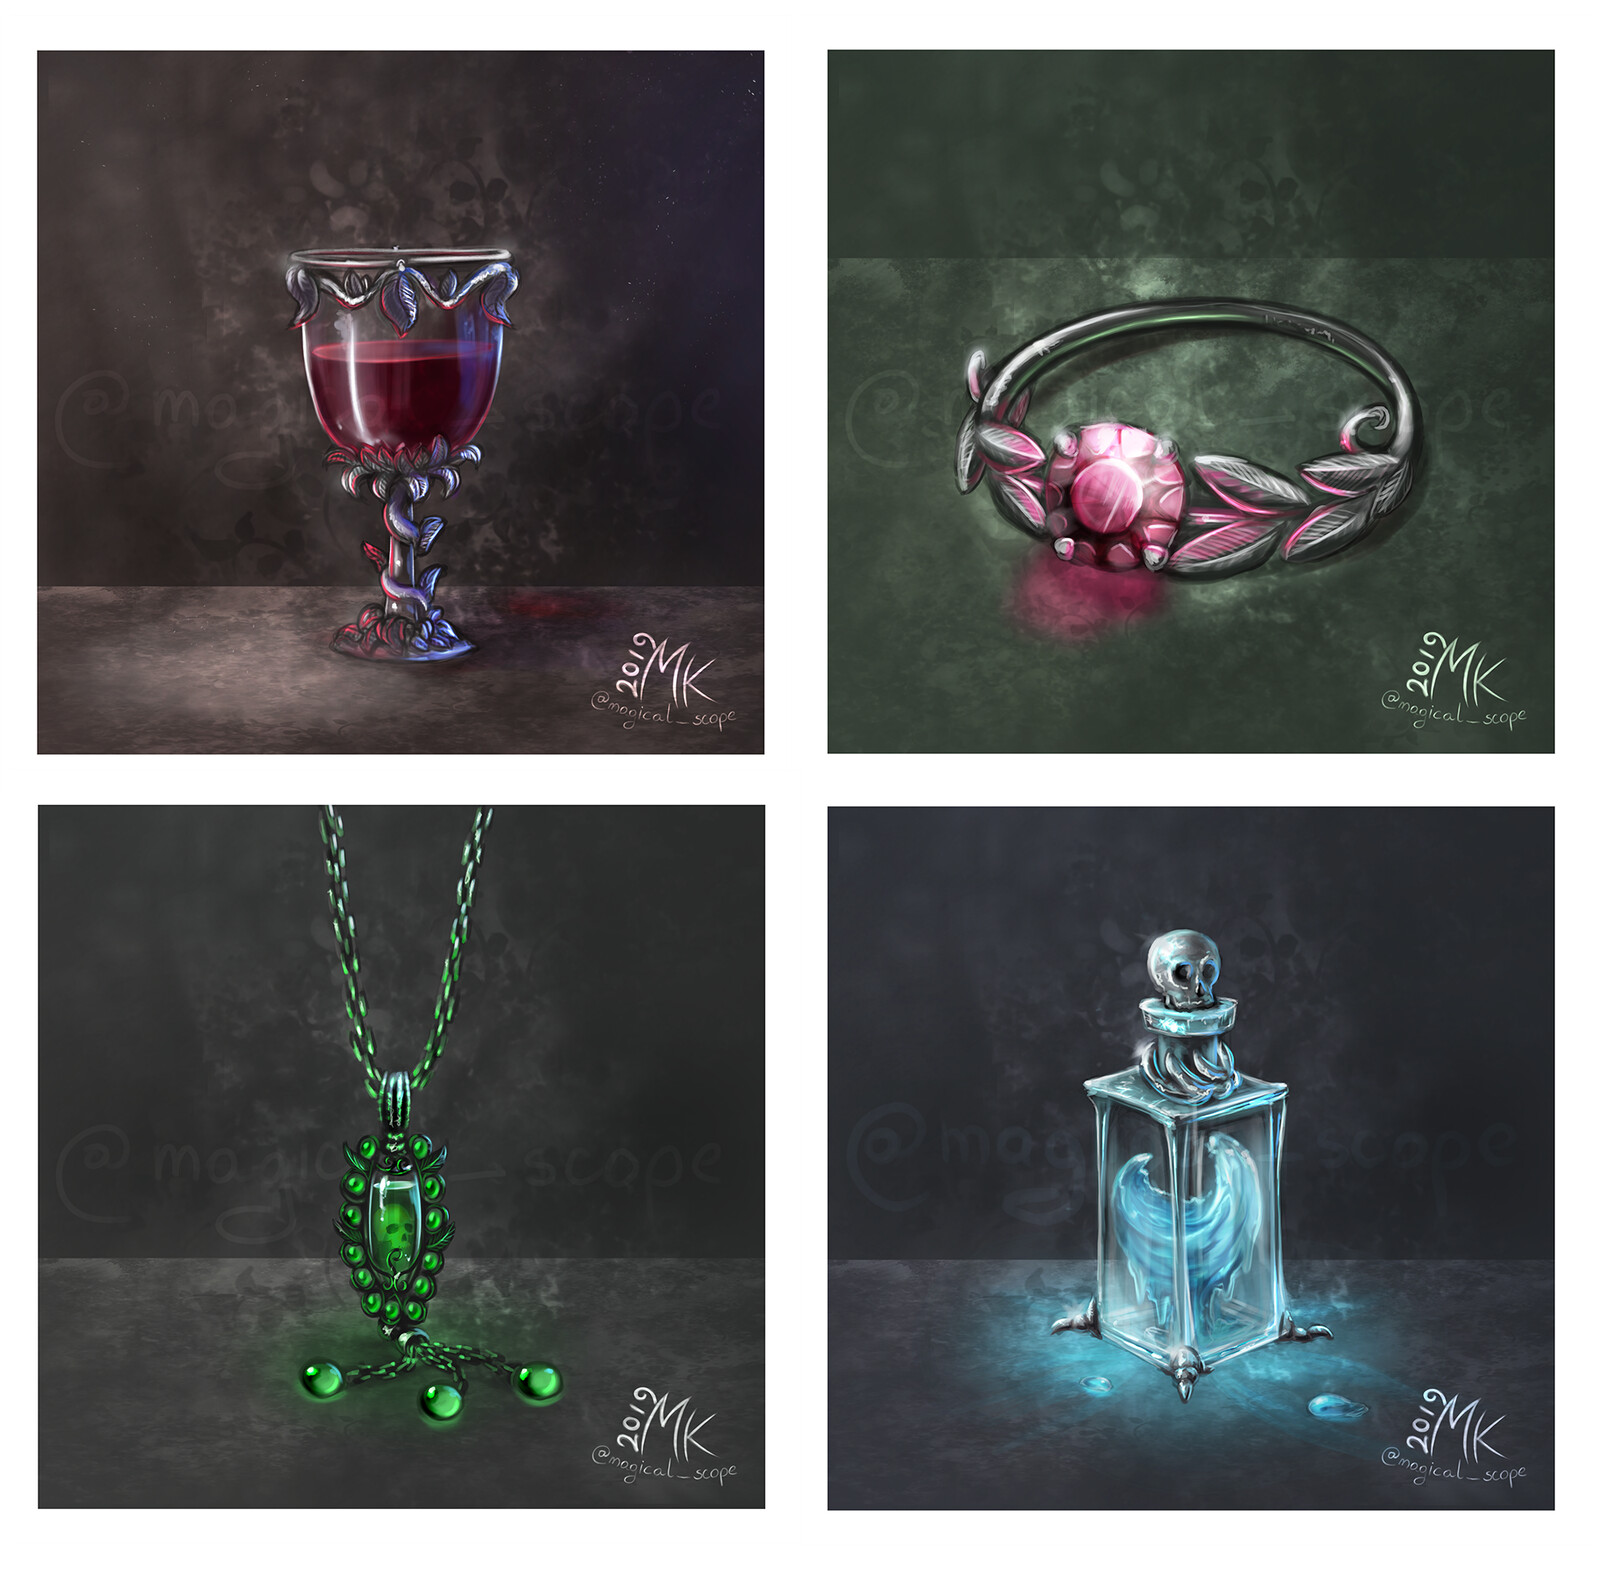 Spooky-theme items